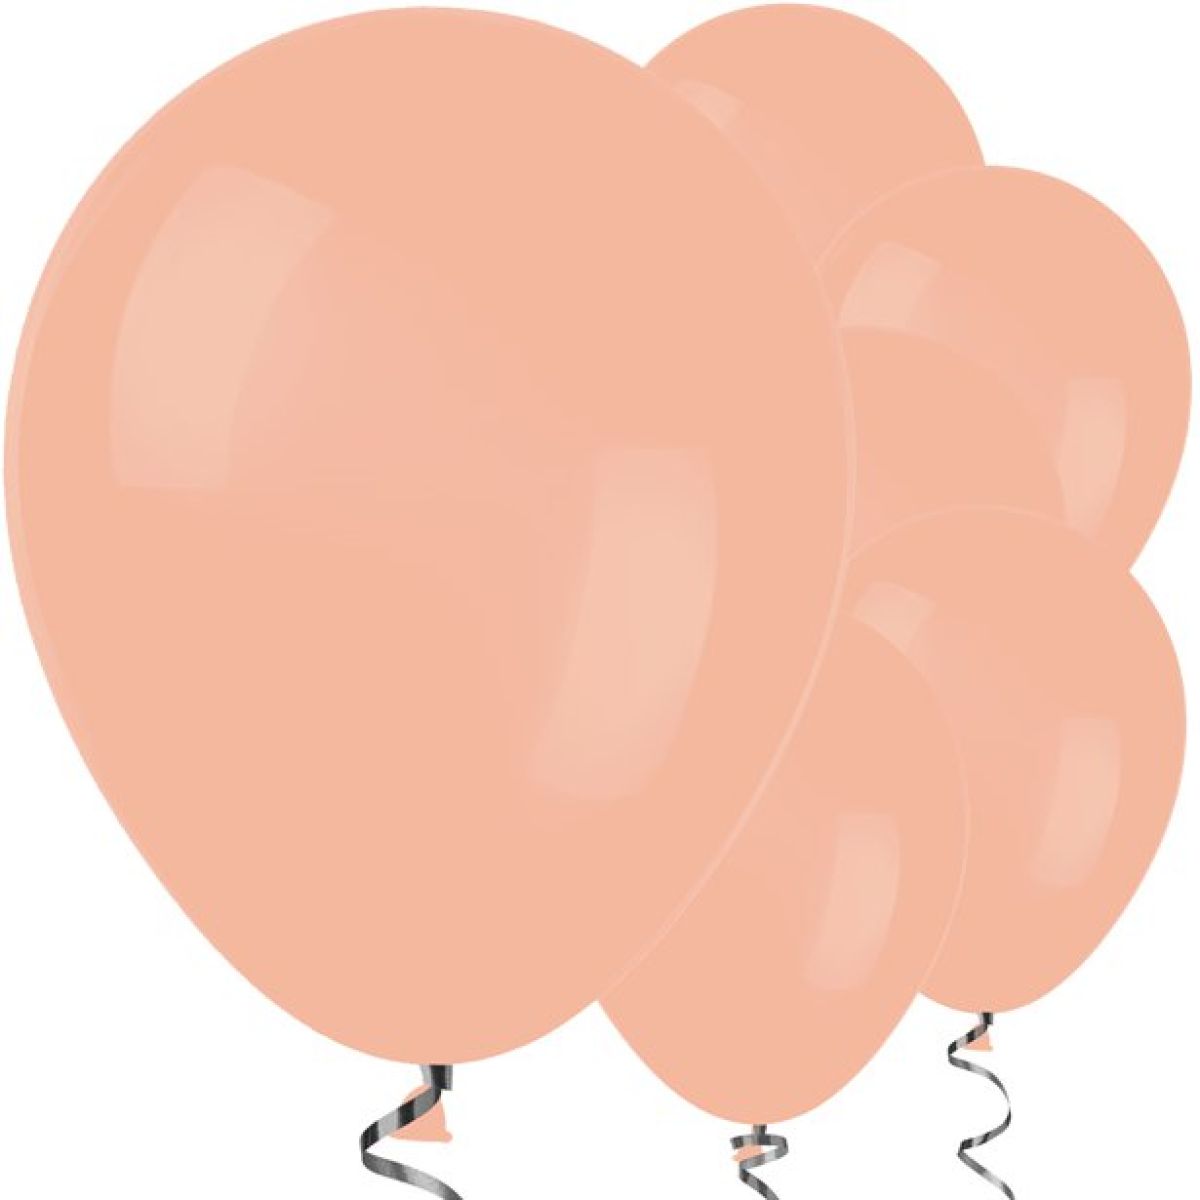 Peach Balloons - 12" Latex Balloons